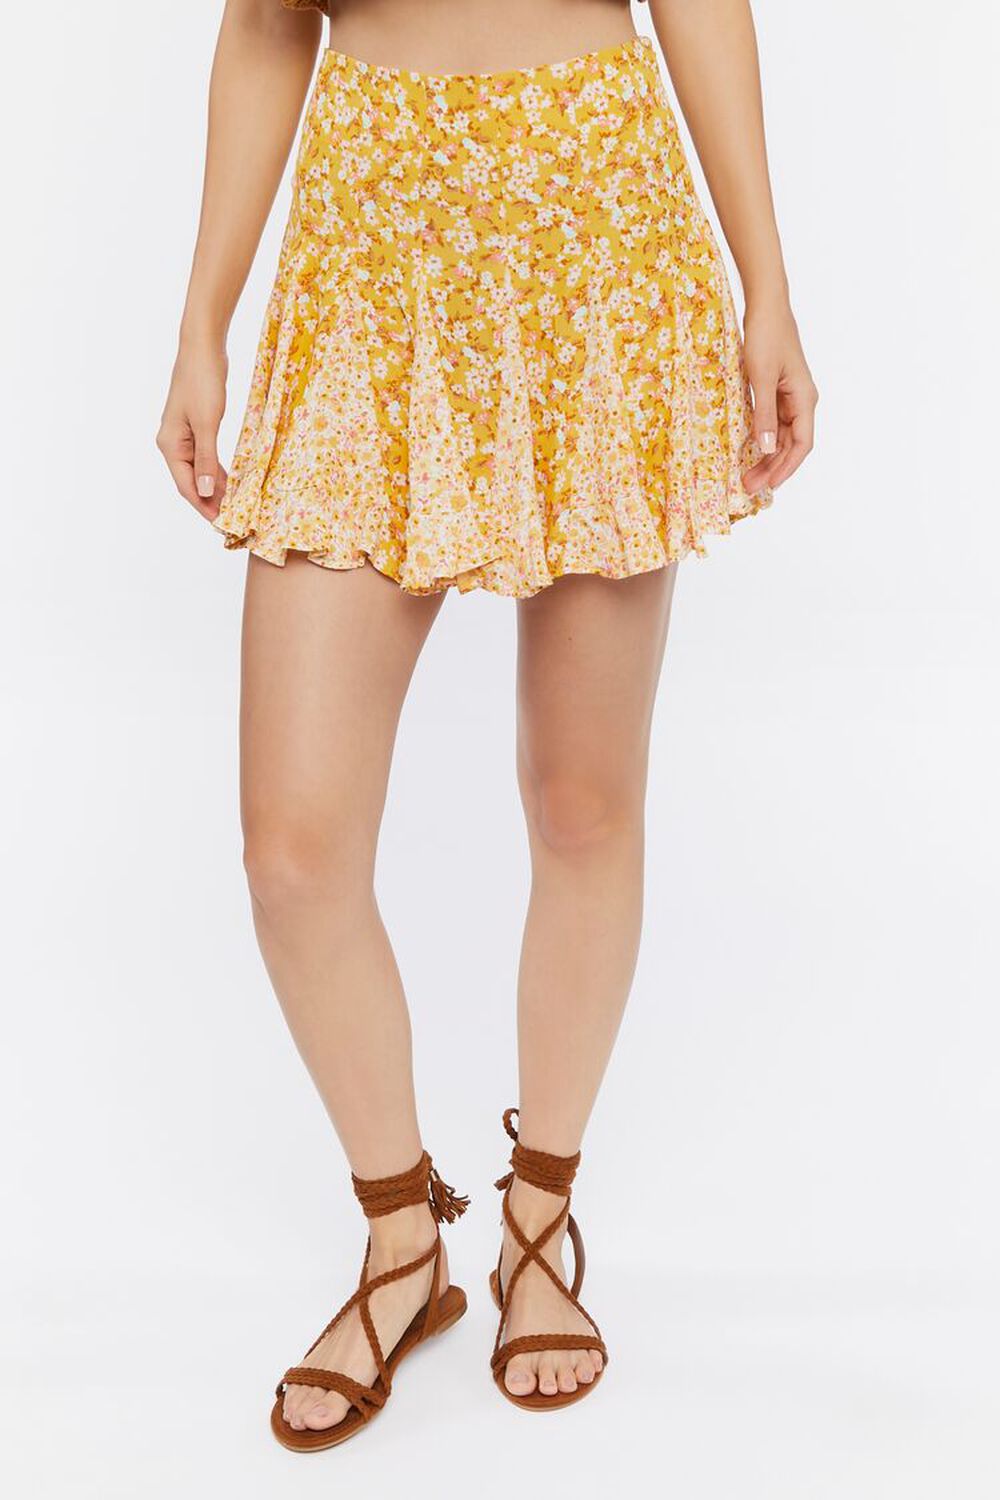 YELLOW GOLD/MULTI Floral Print Mini Skirt, image 2